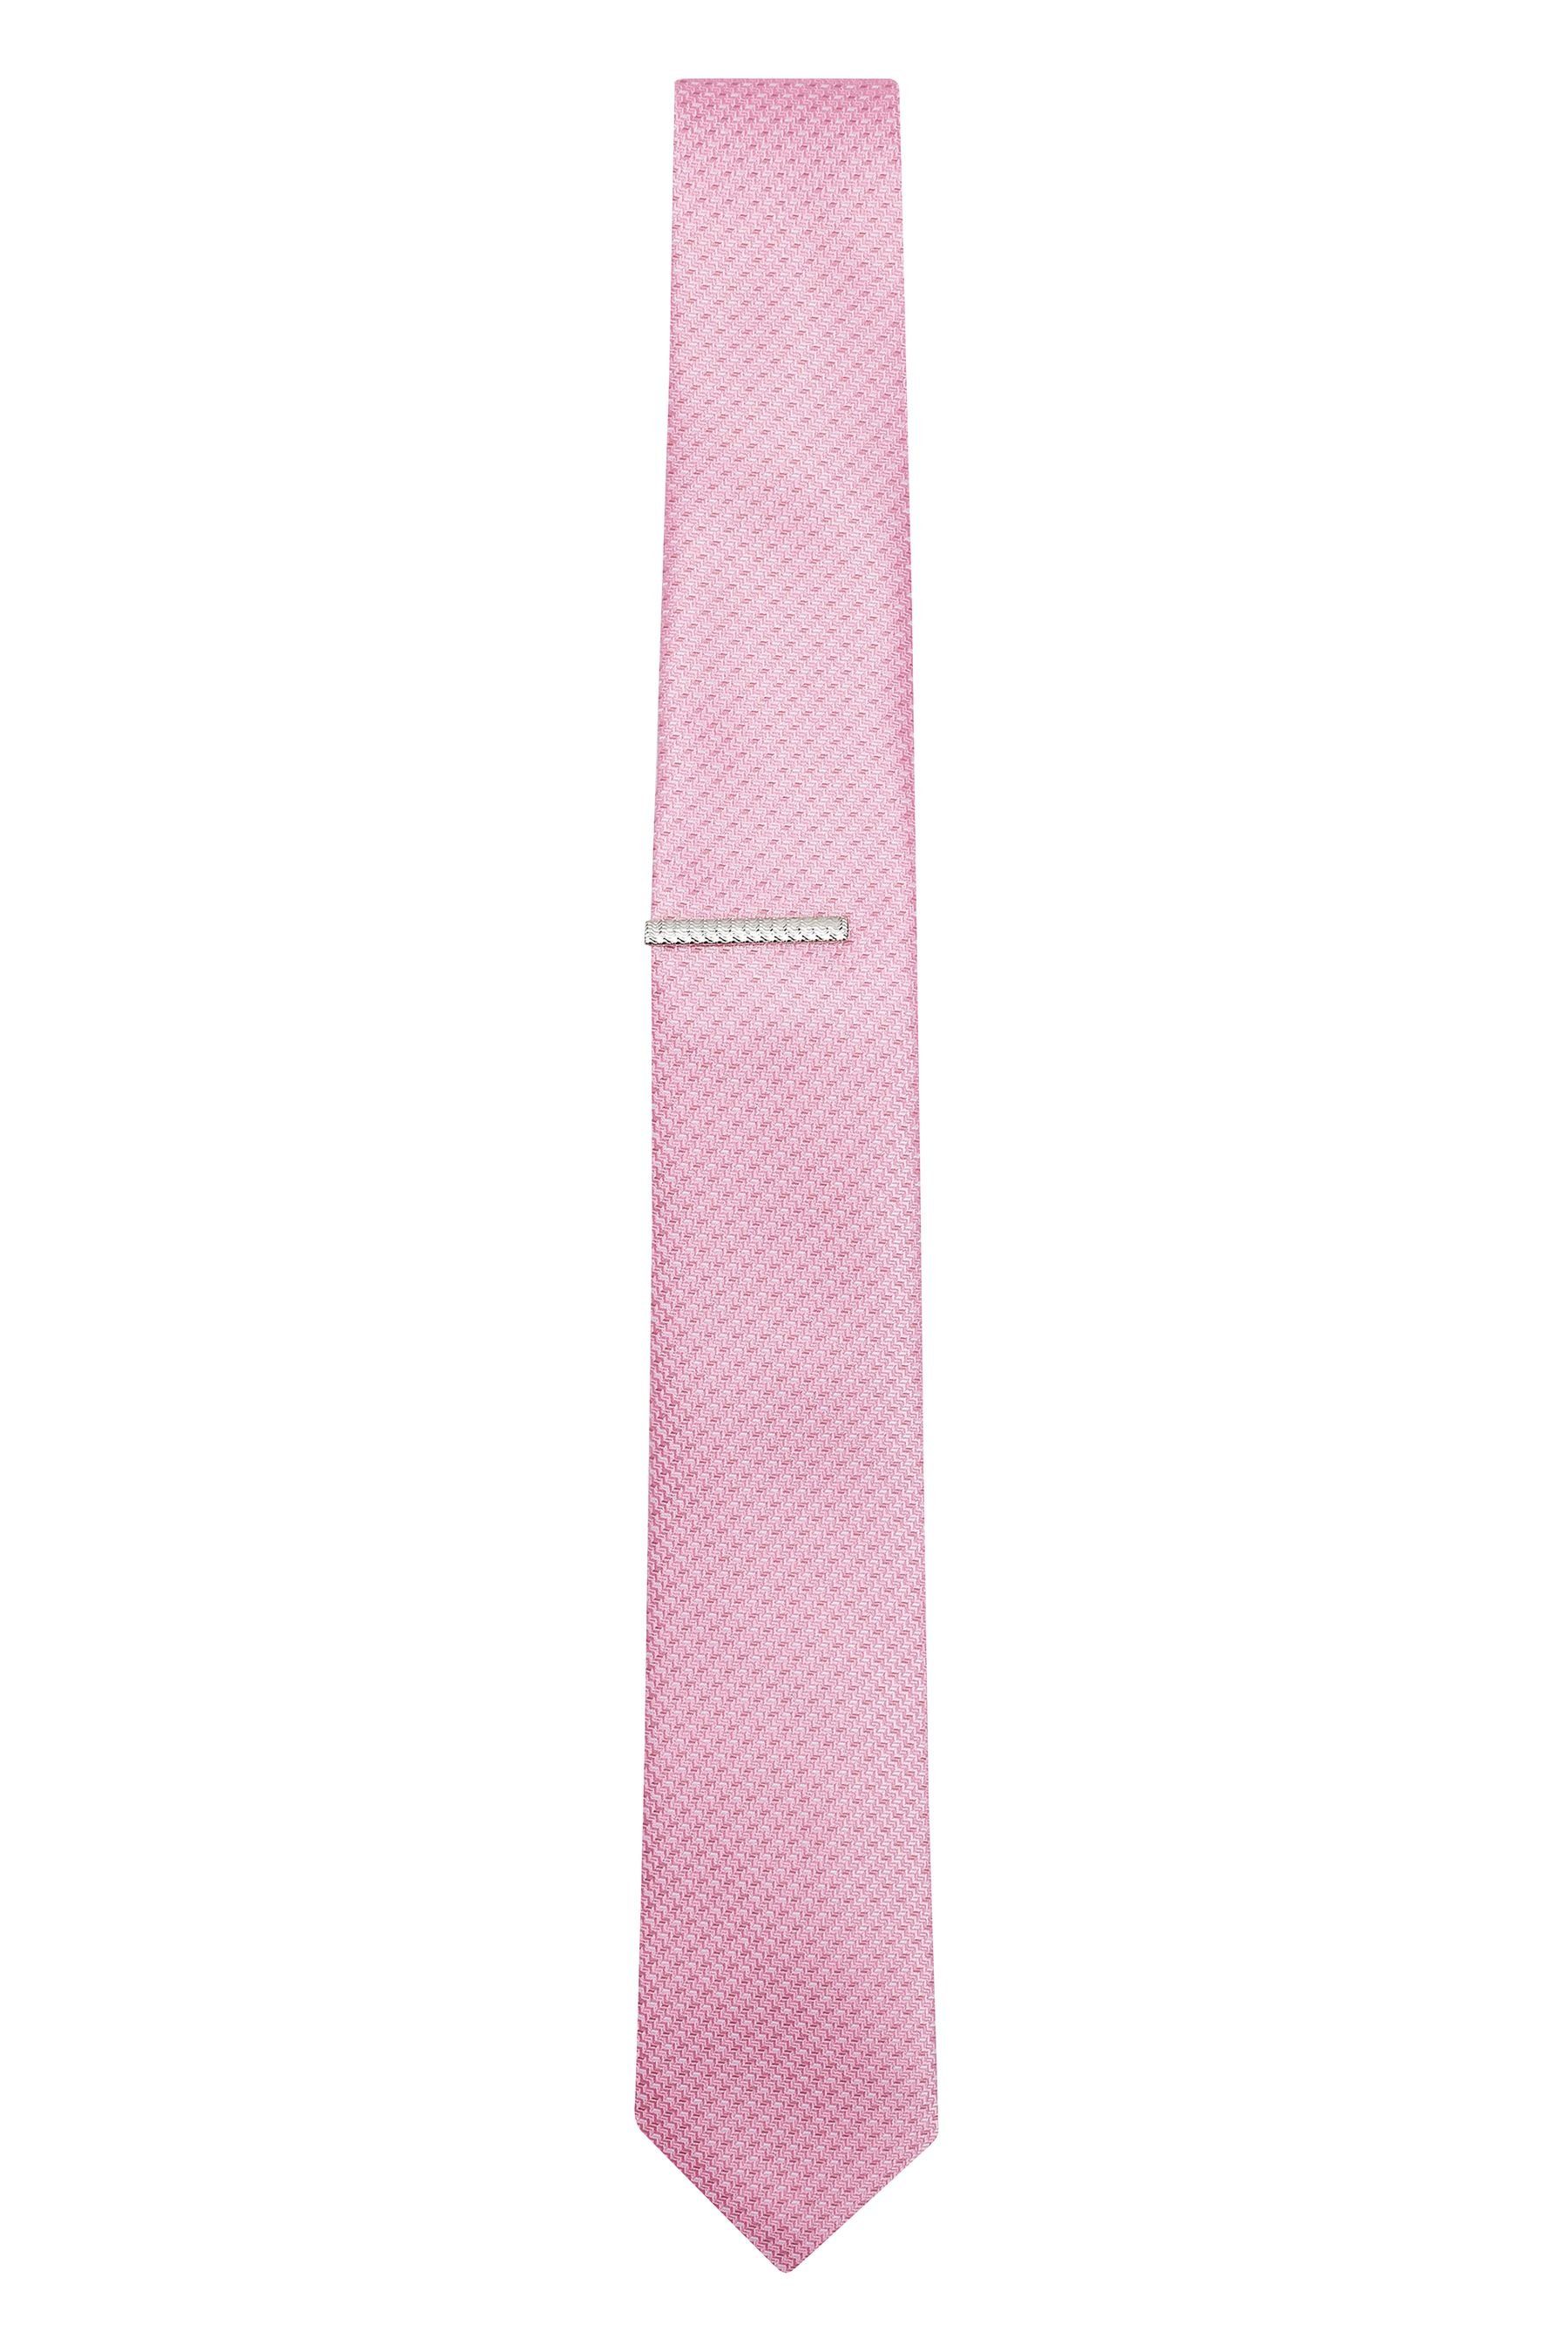 Next Krawatte Schmale Krawatte aus Light + Klammer Recyclingpolyester (2-St) Pink